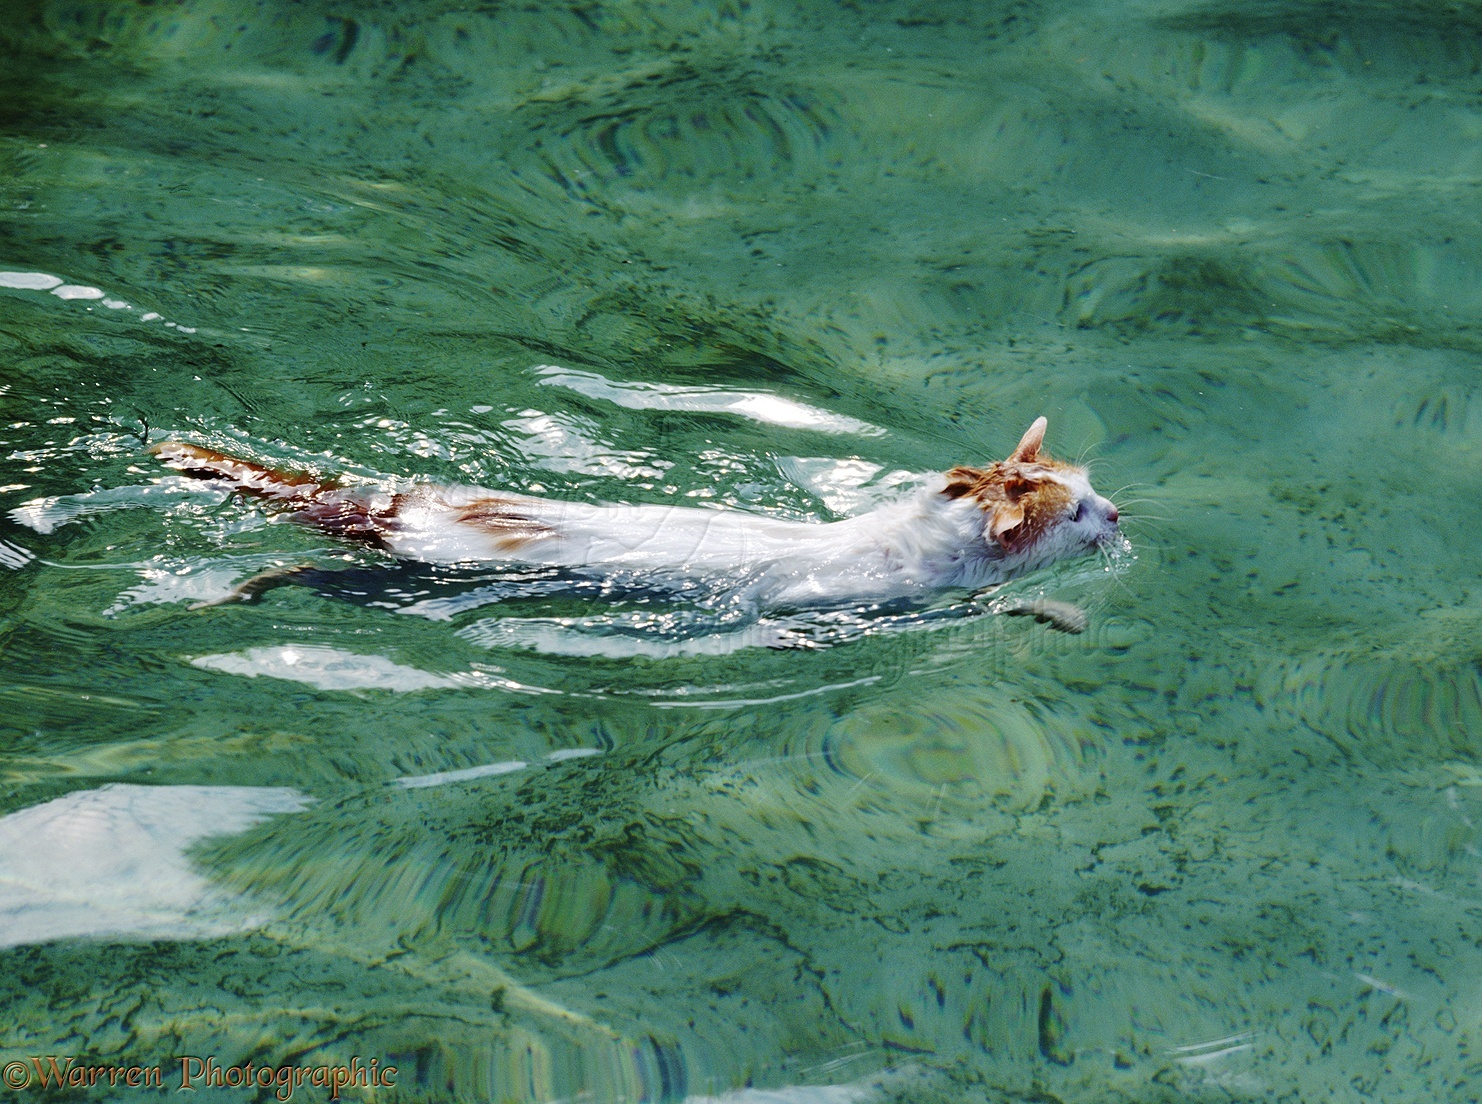 http://www.warrenphotographic.co.uk/photography/bigs/00285-Turkish-Van-Cat-swimming.jpg